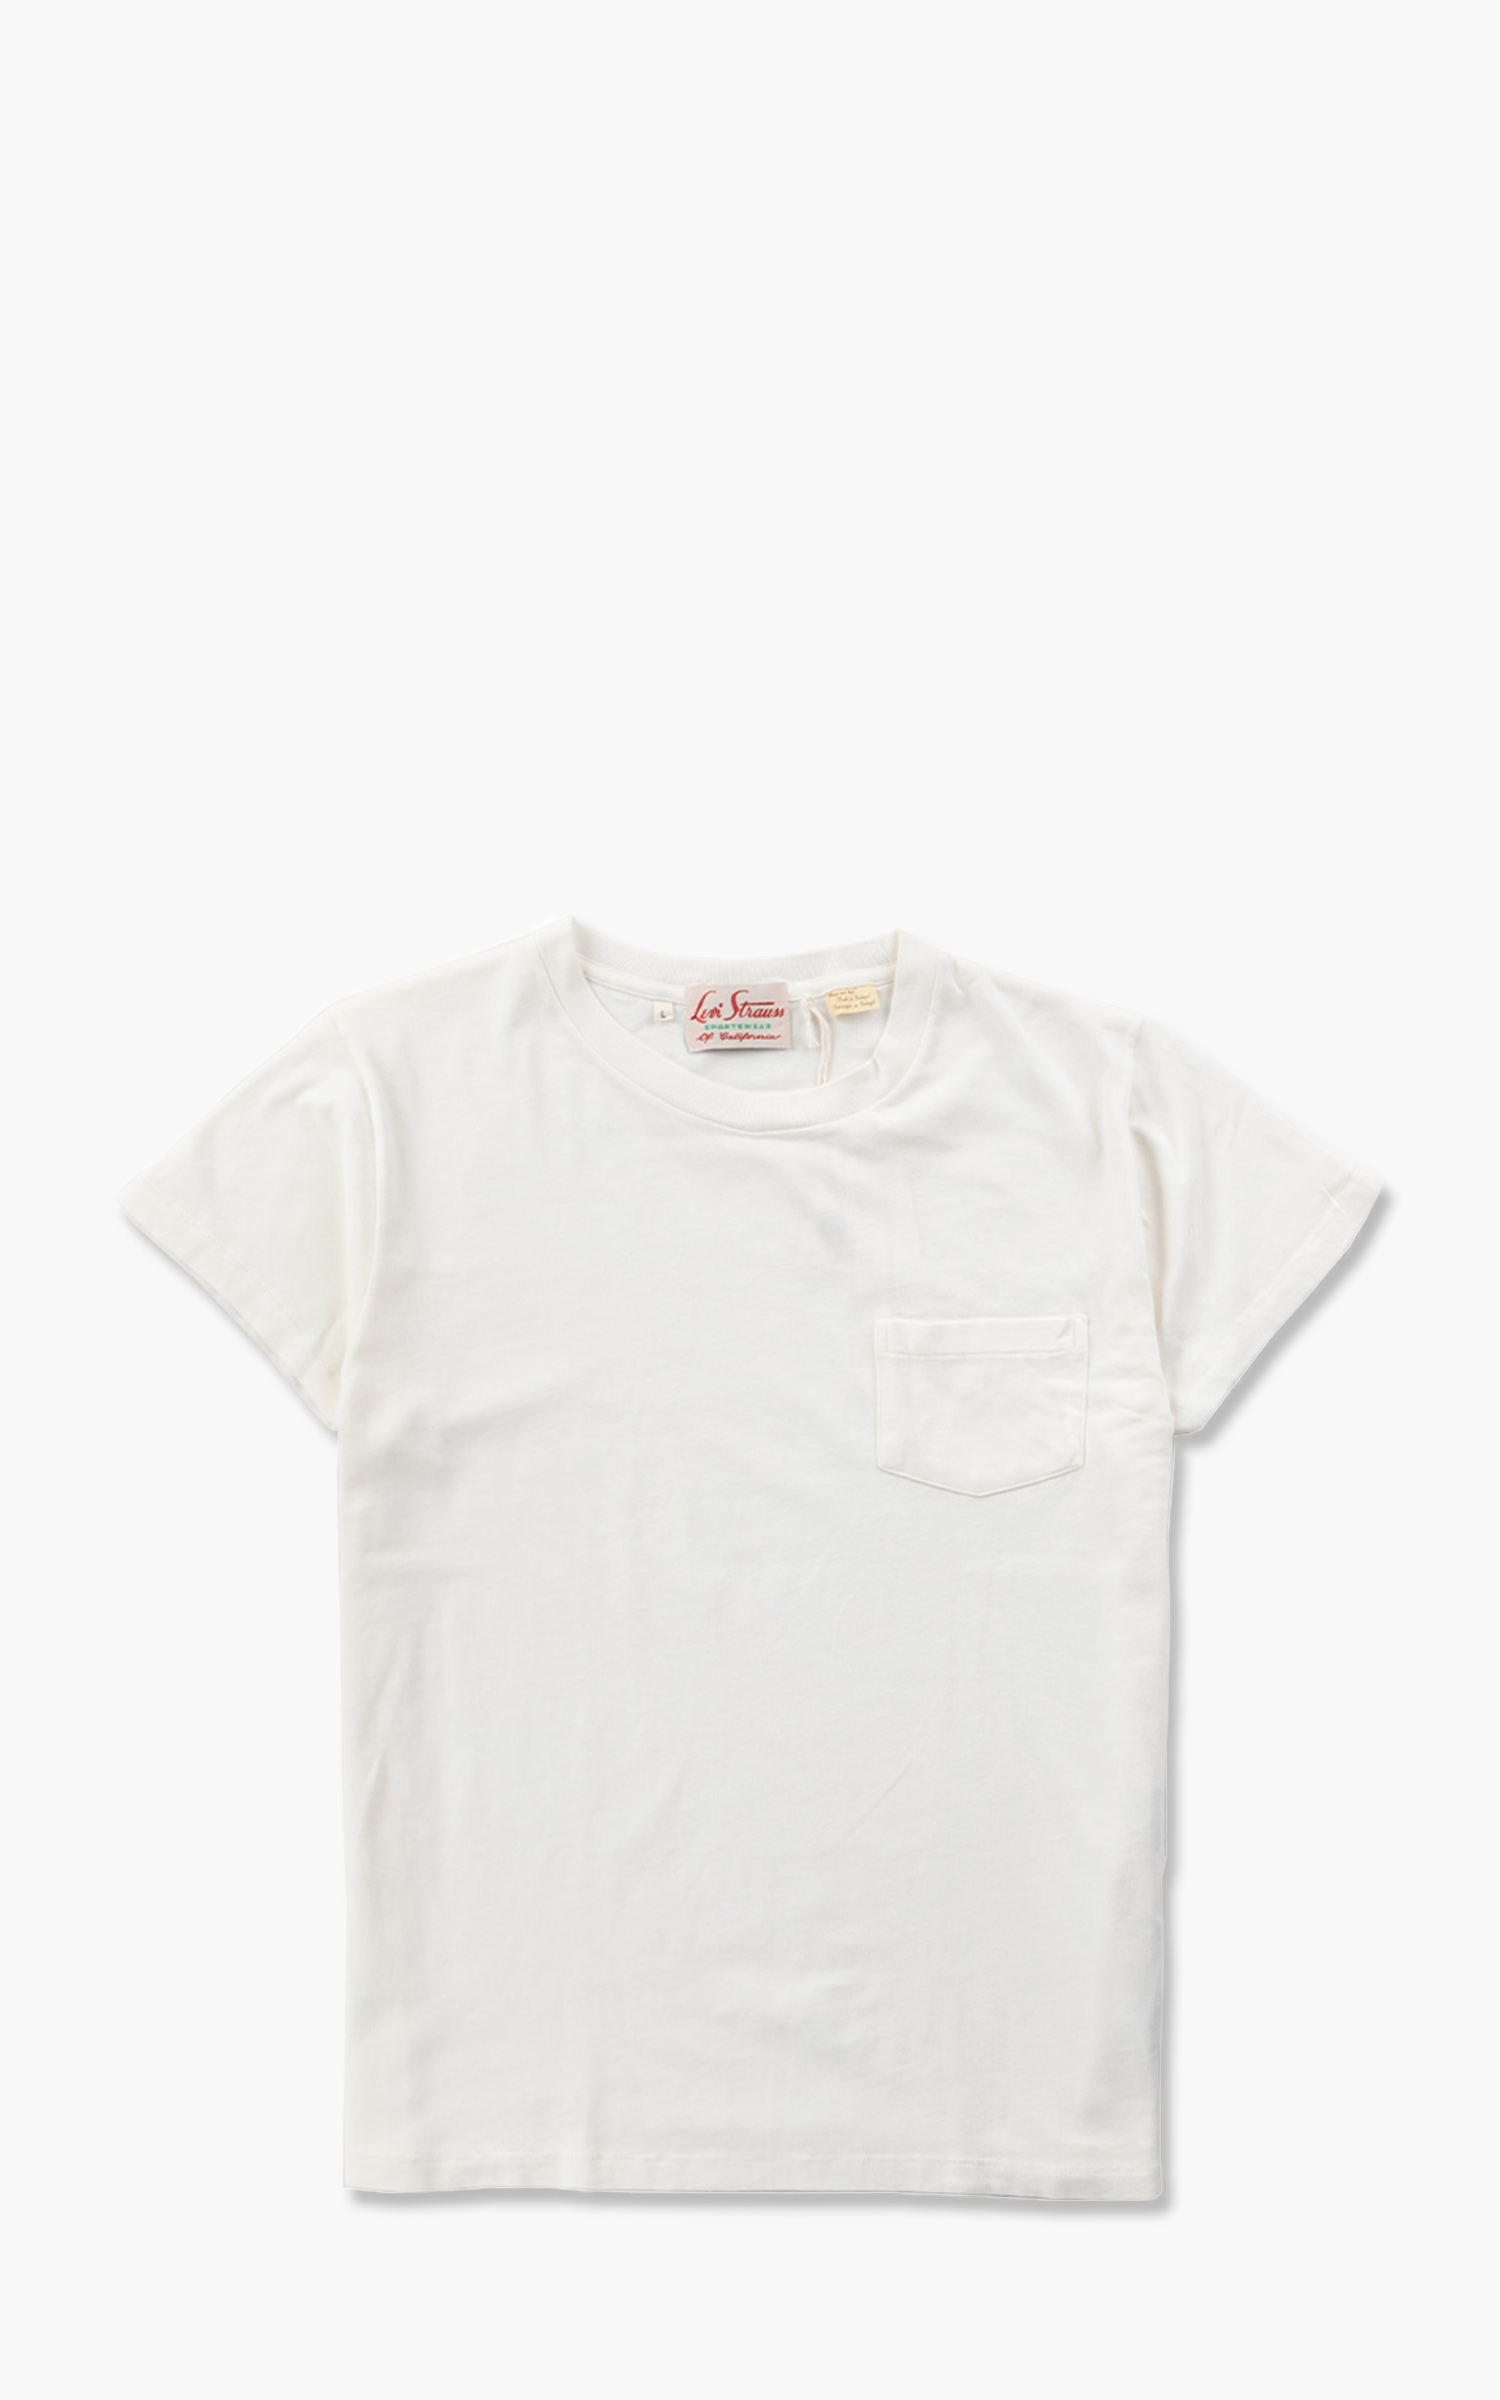 Levis Vintage Clothing White 1950s Sportswear T-Shirt